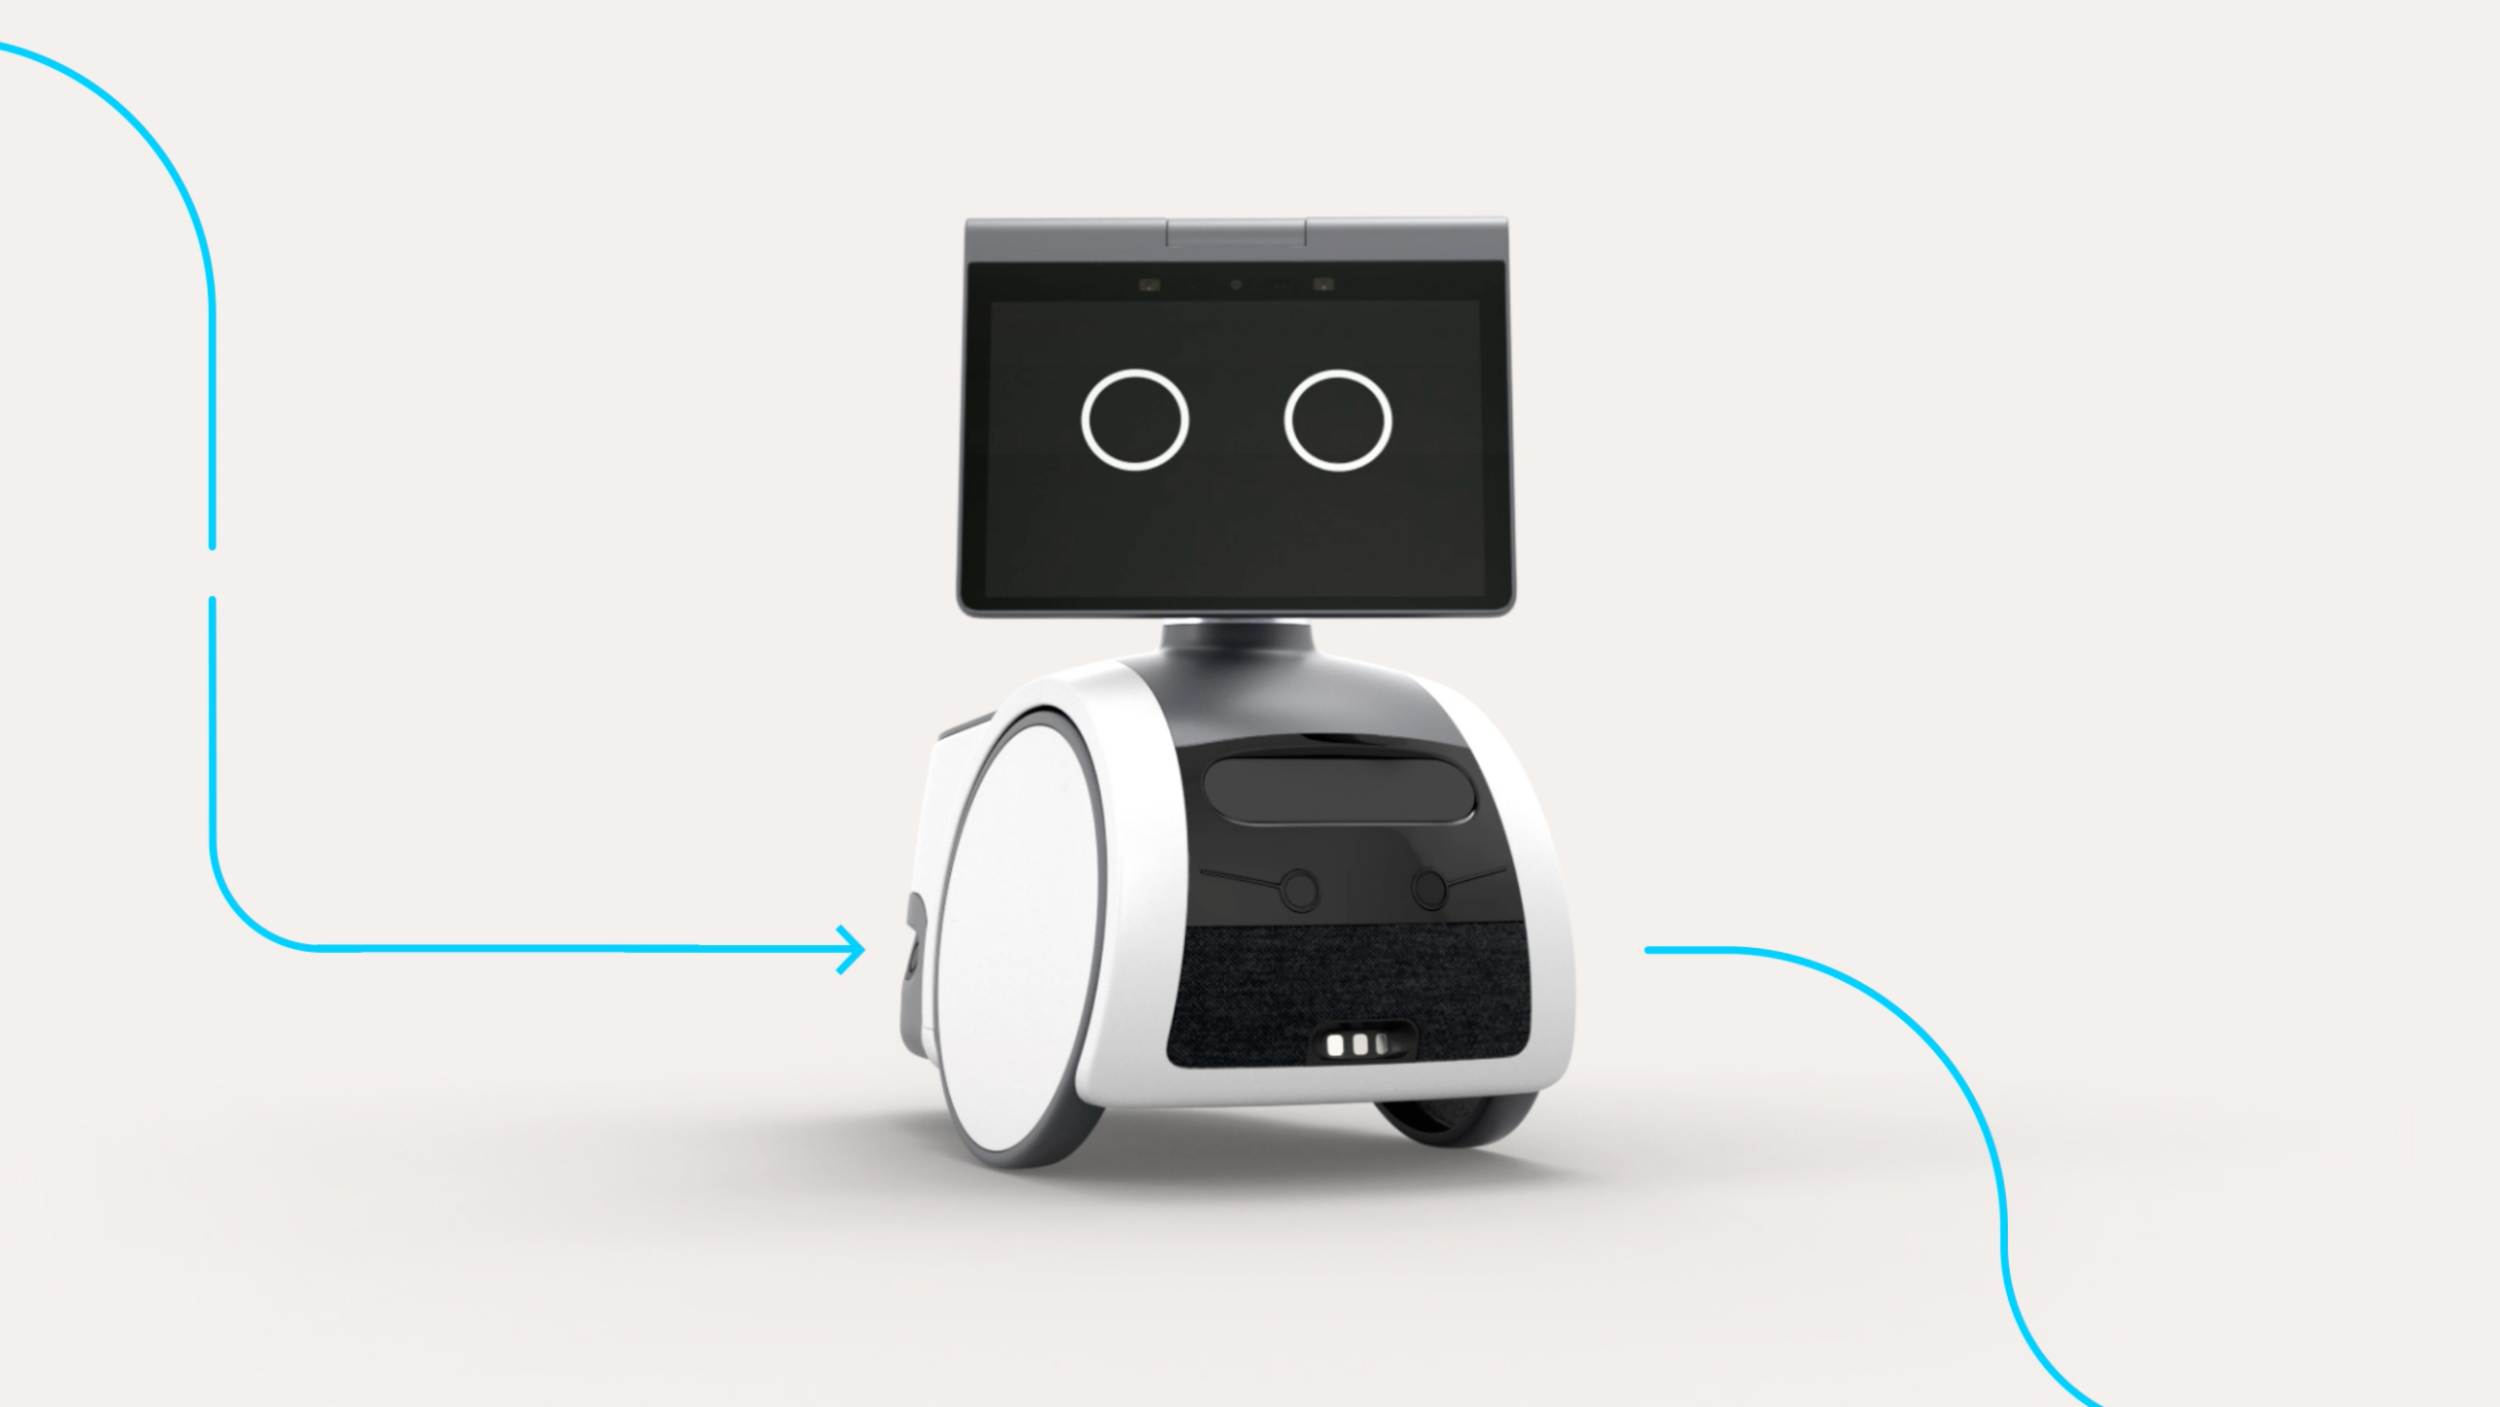 Amazon Memperkenalkan Robot Pintar Untuk Rumah – Astro